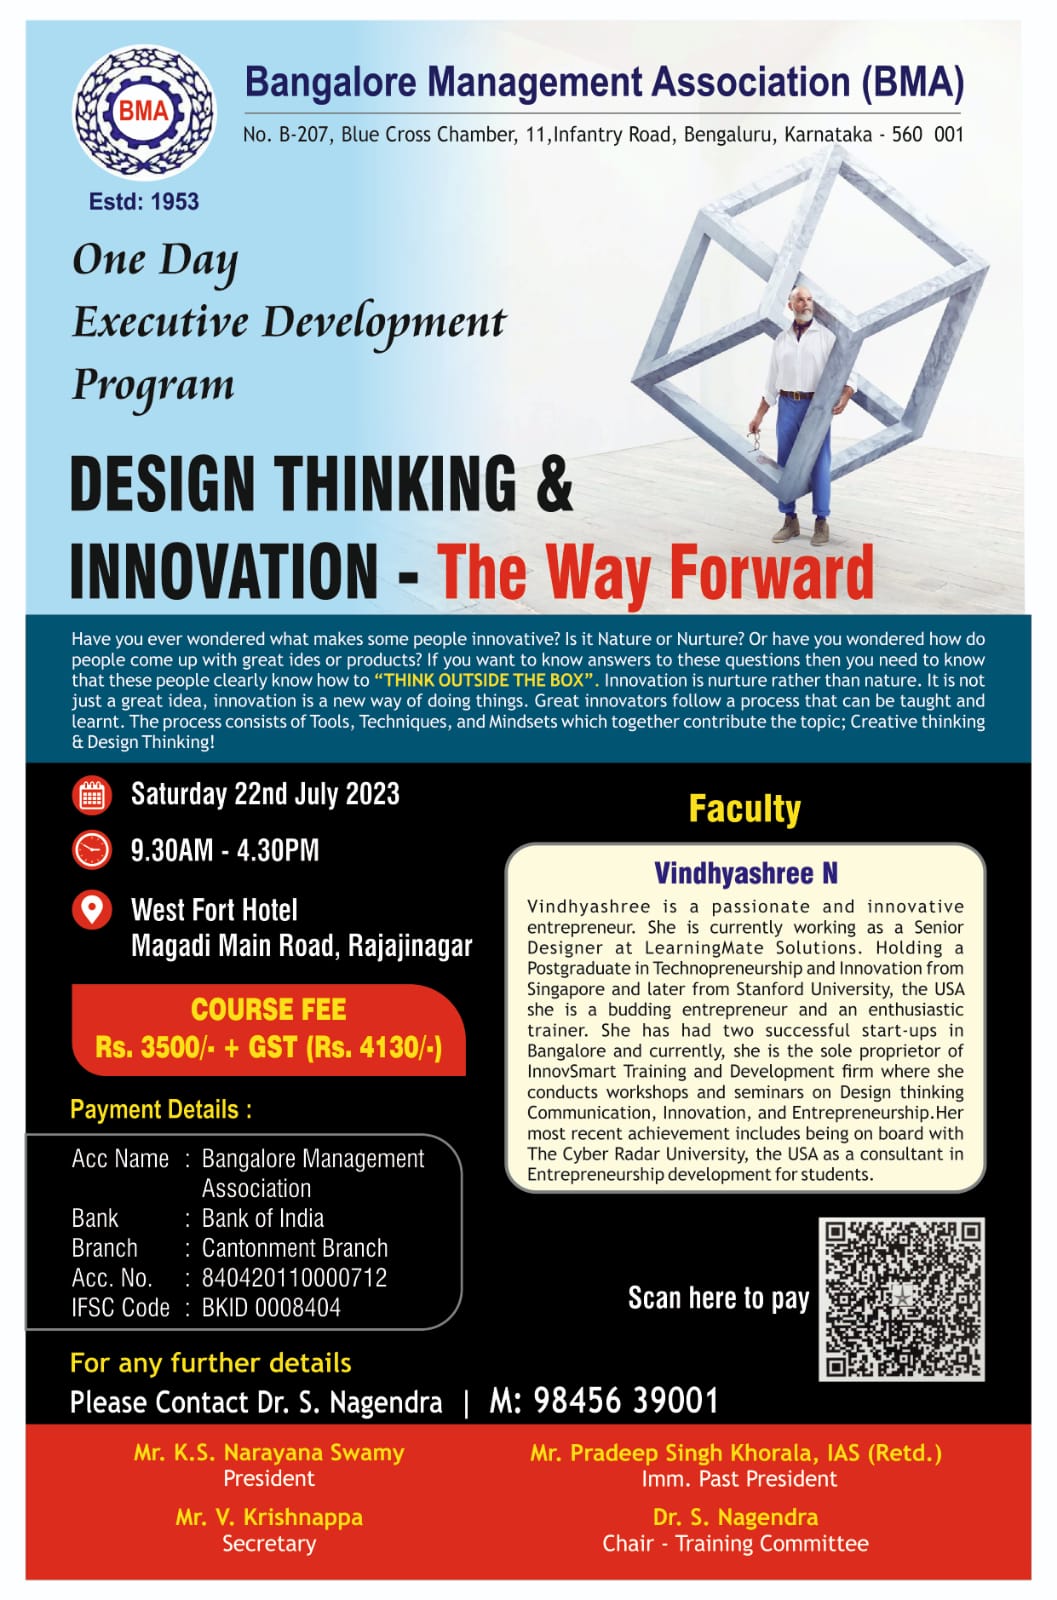 https://www.bmabangalore.com/images/2023/Design_Thinking_and_Innovation.jpeg